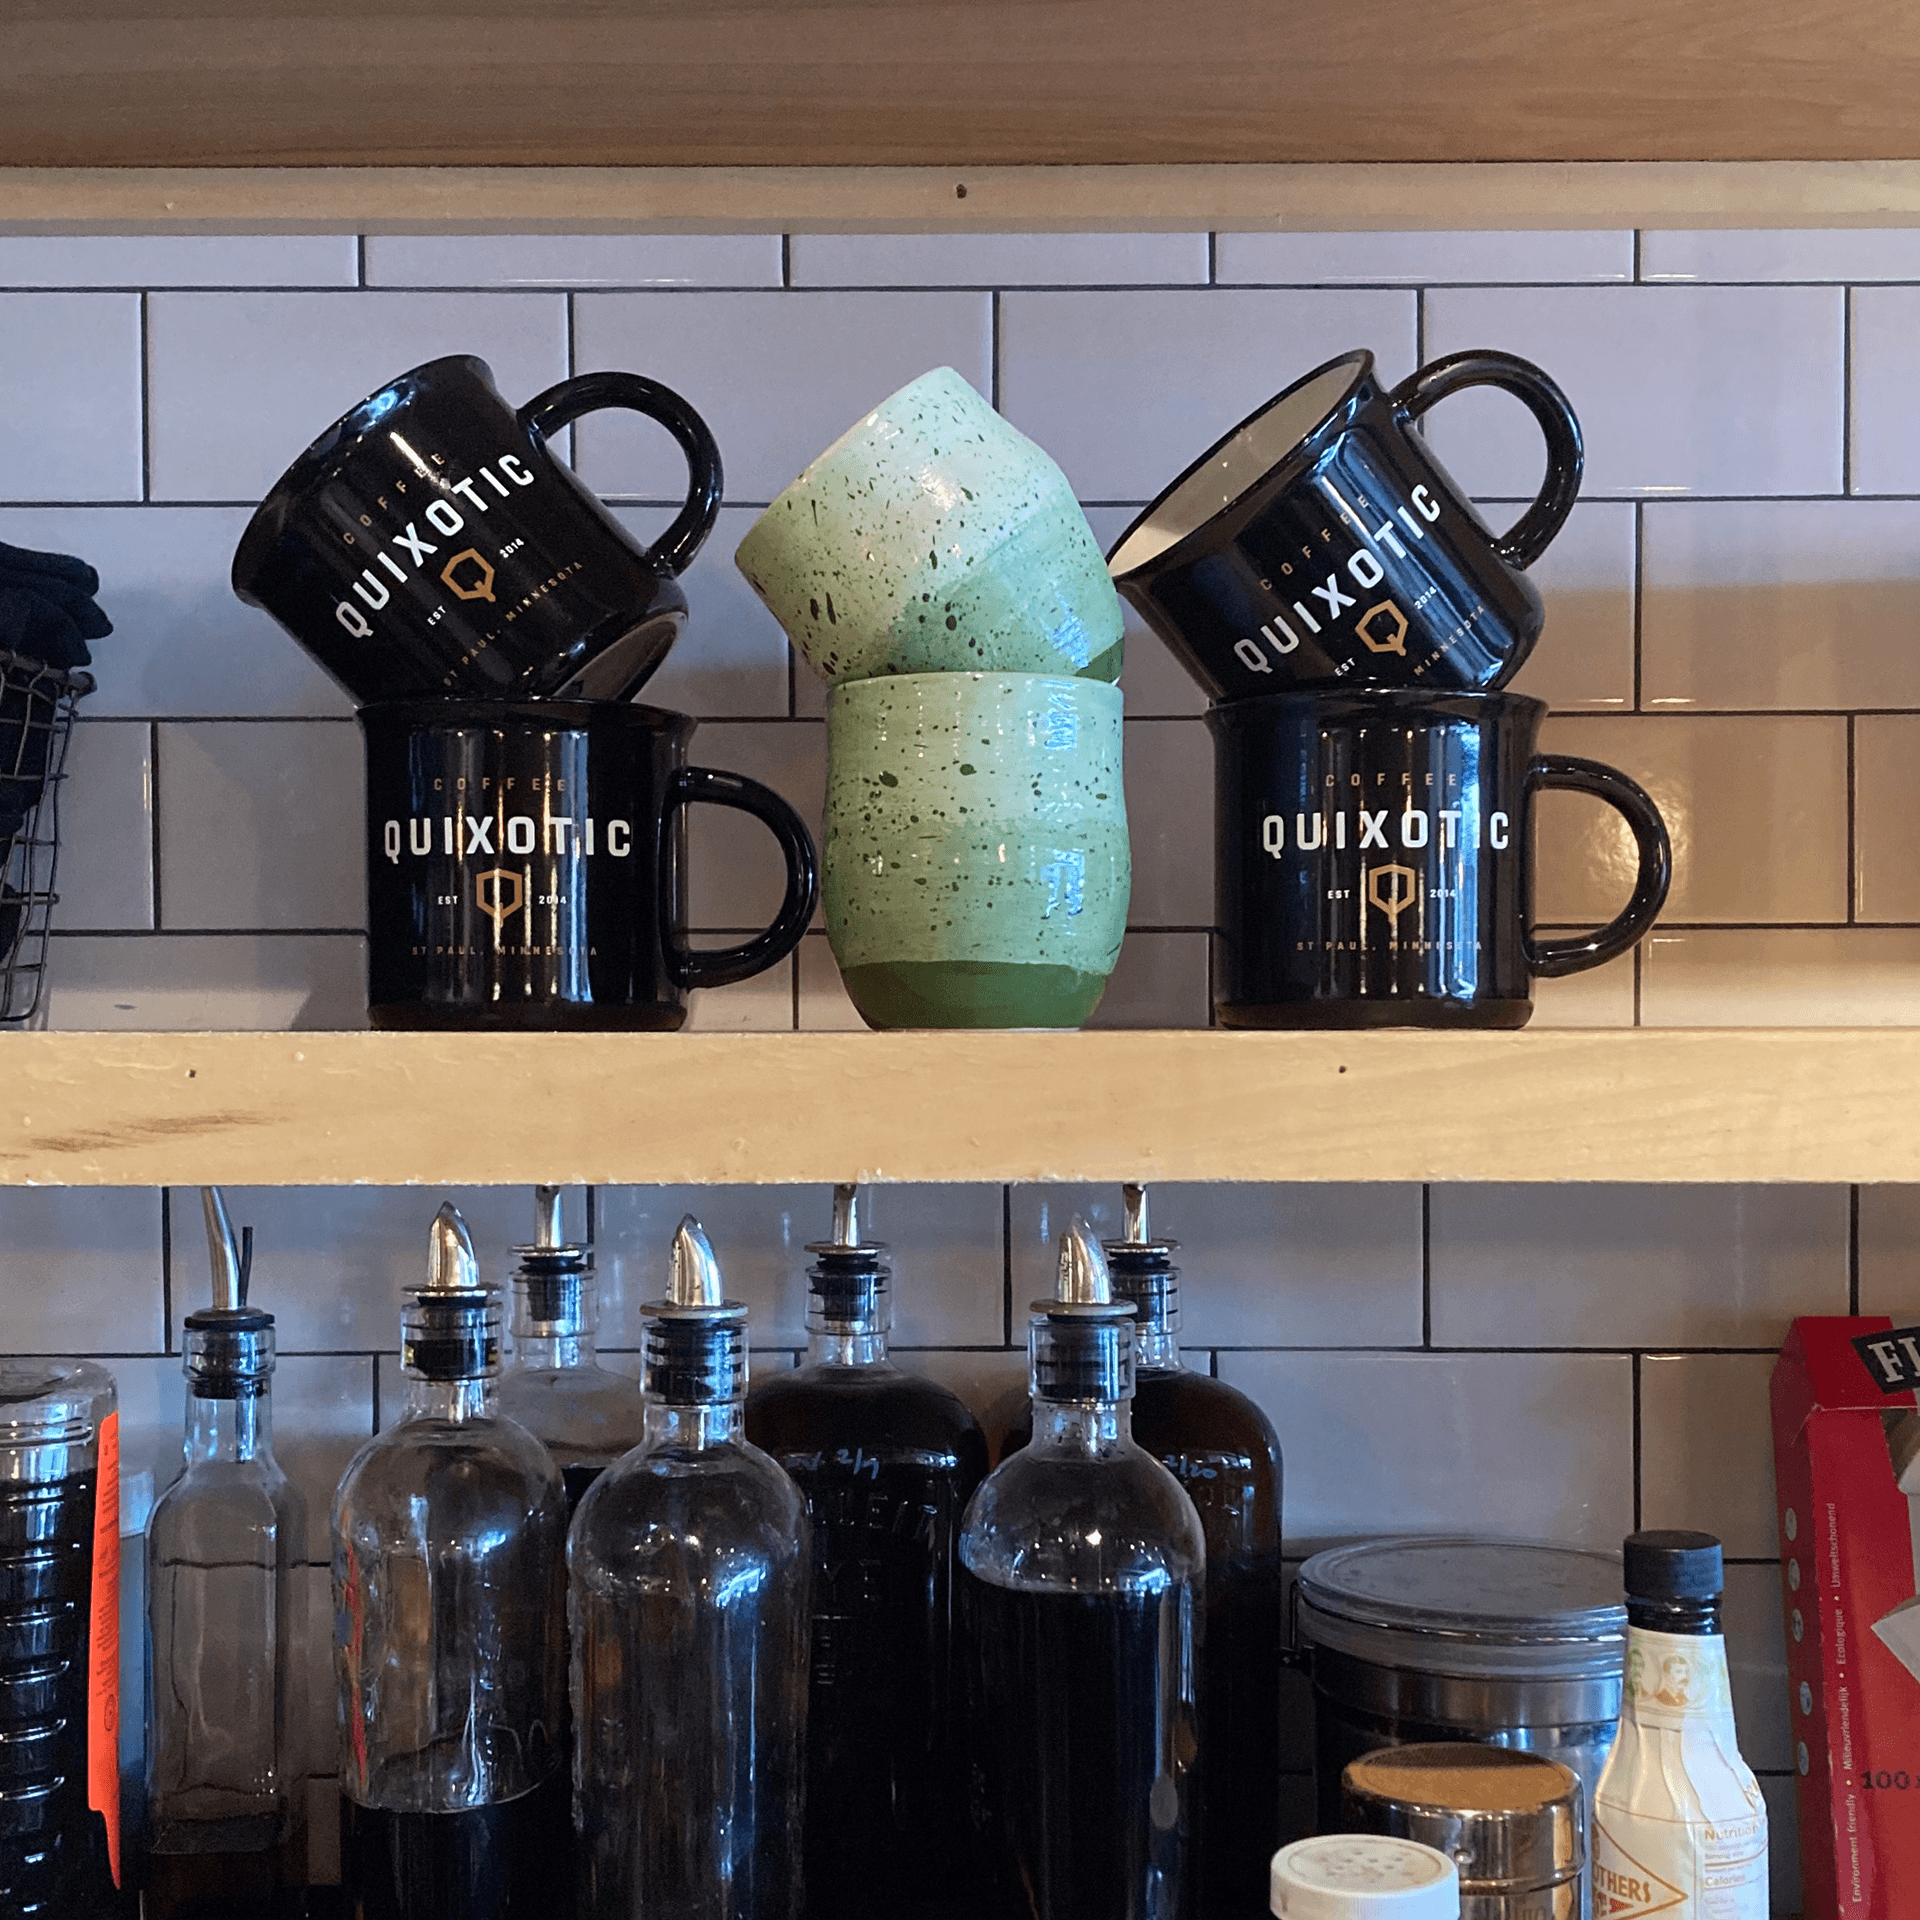 Display shelf with green ceramic mugs and Quixotic coffee mugs